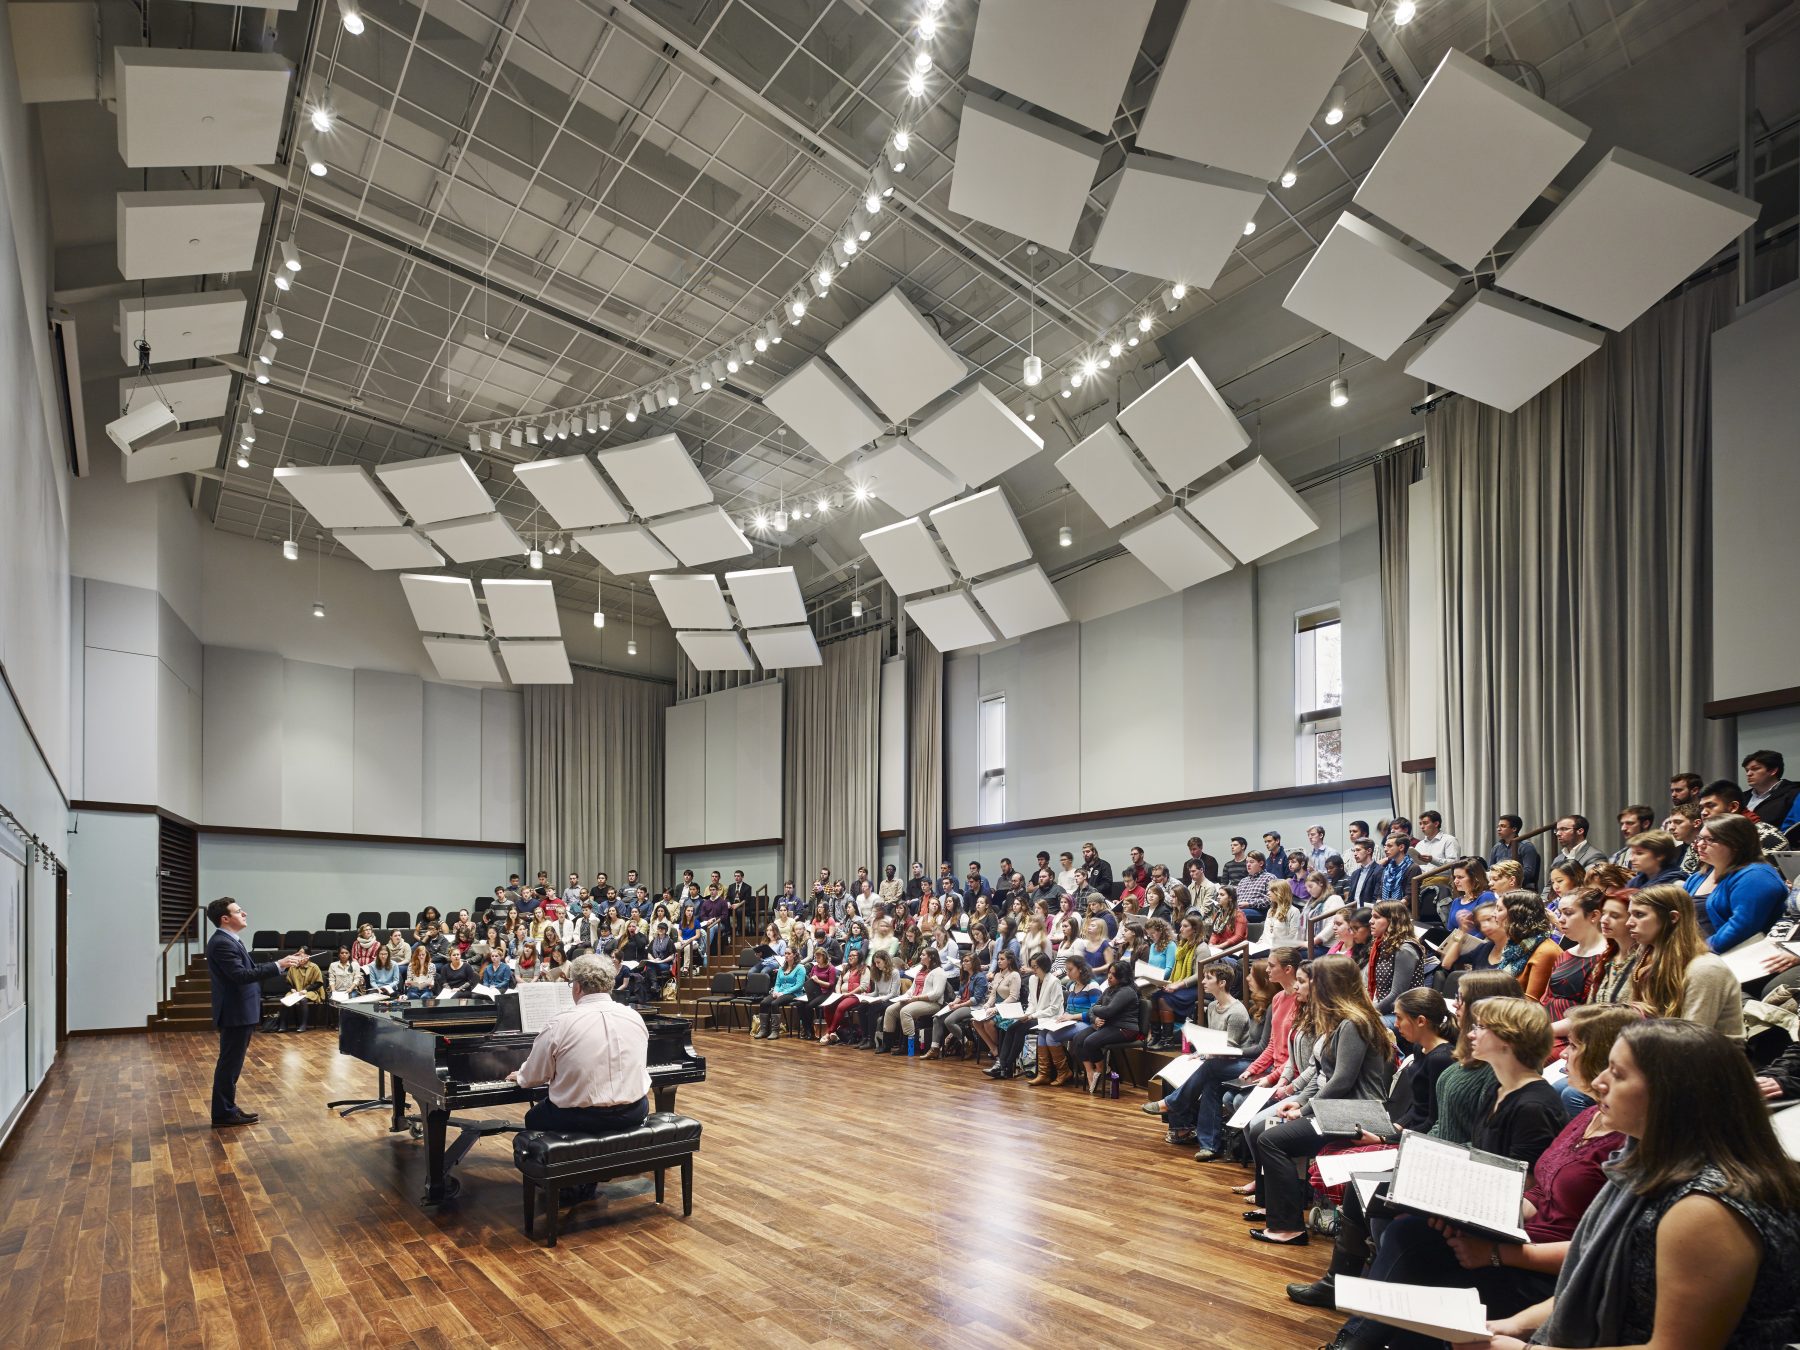 Westminster Choir College Cullen Center during performance